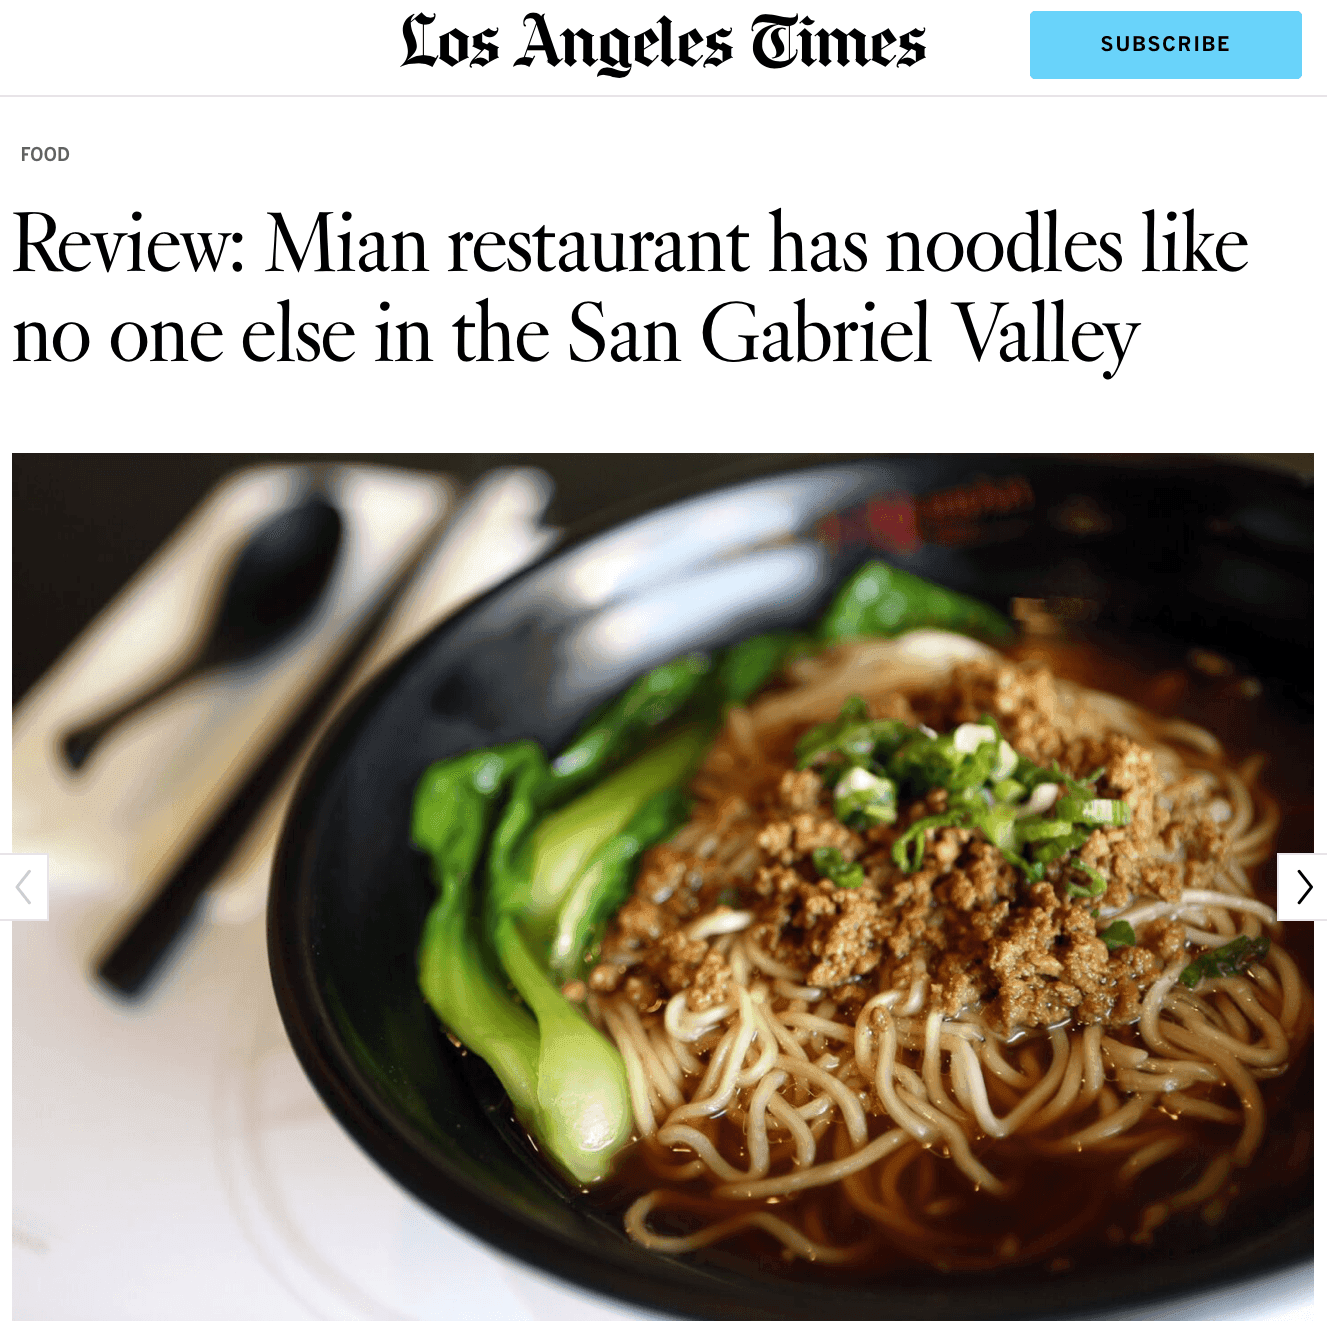 Mian restaurant testimonial on Los Angeles Times